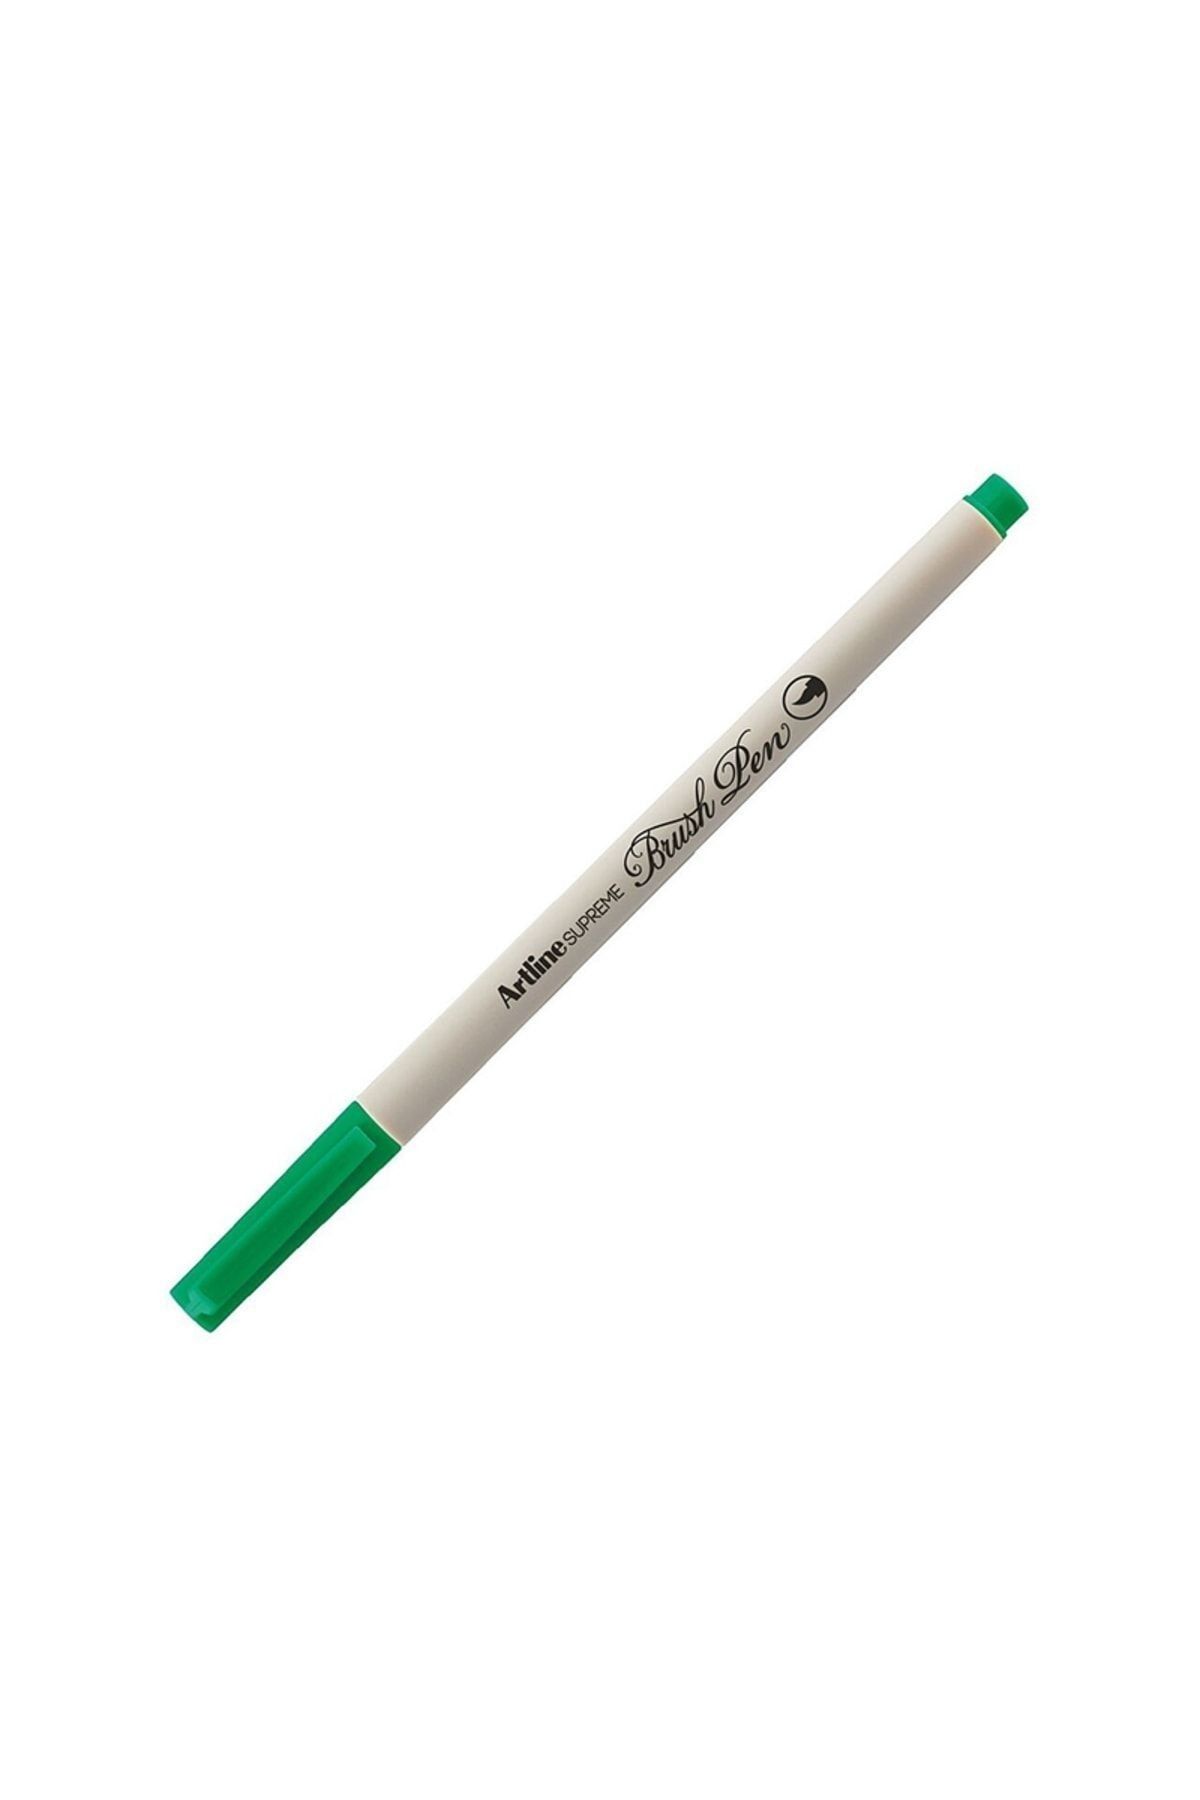 artline Supreme Ince Fırça Uçlu Markör Kalem Yeşil Lv-a-epfs-f Green Lv-a-epfs-f (12 Li Paket)